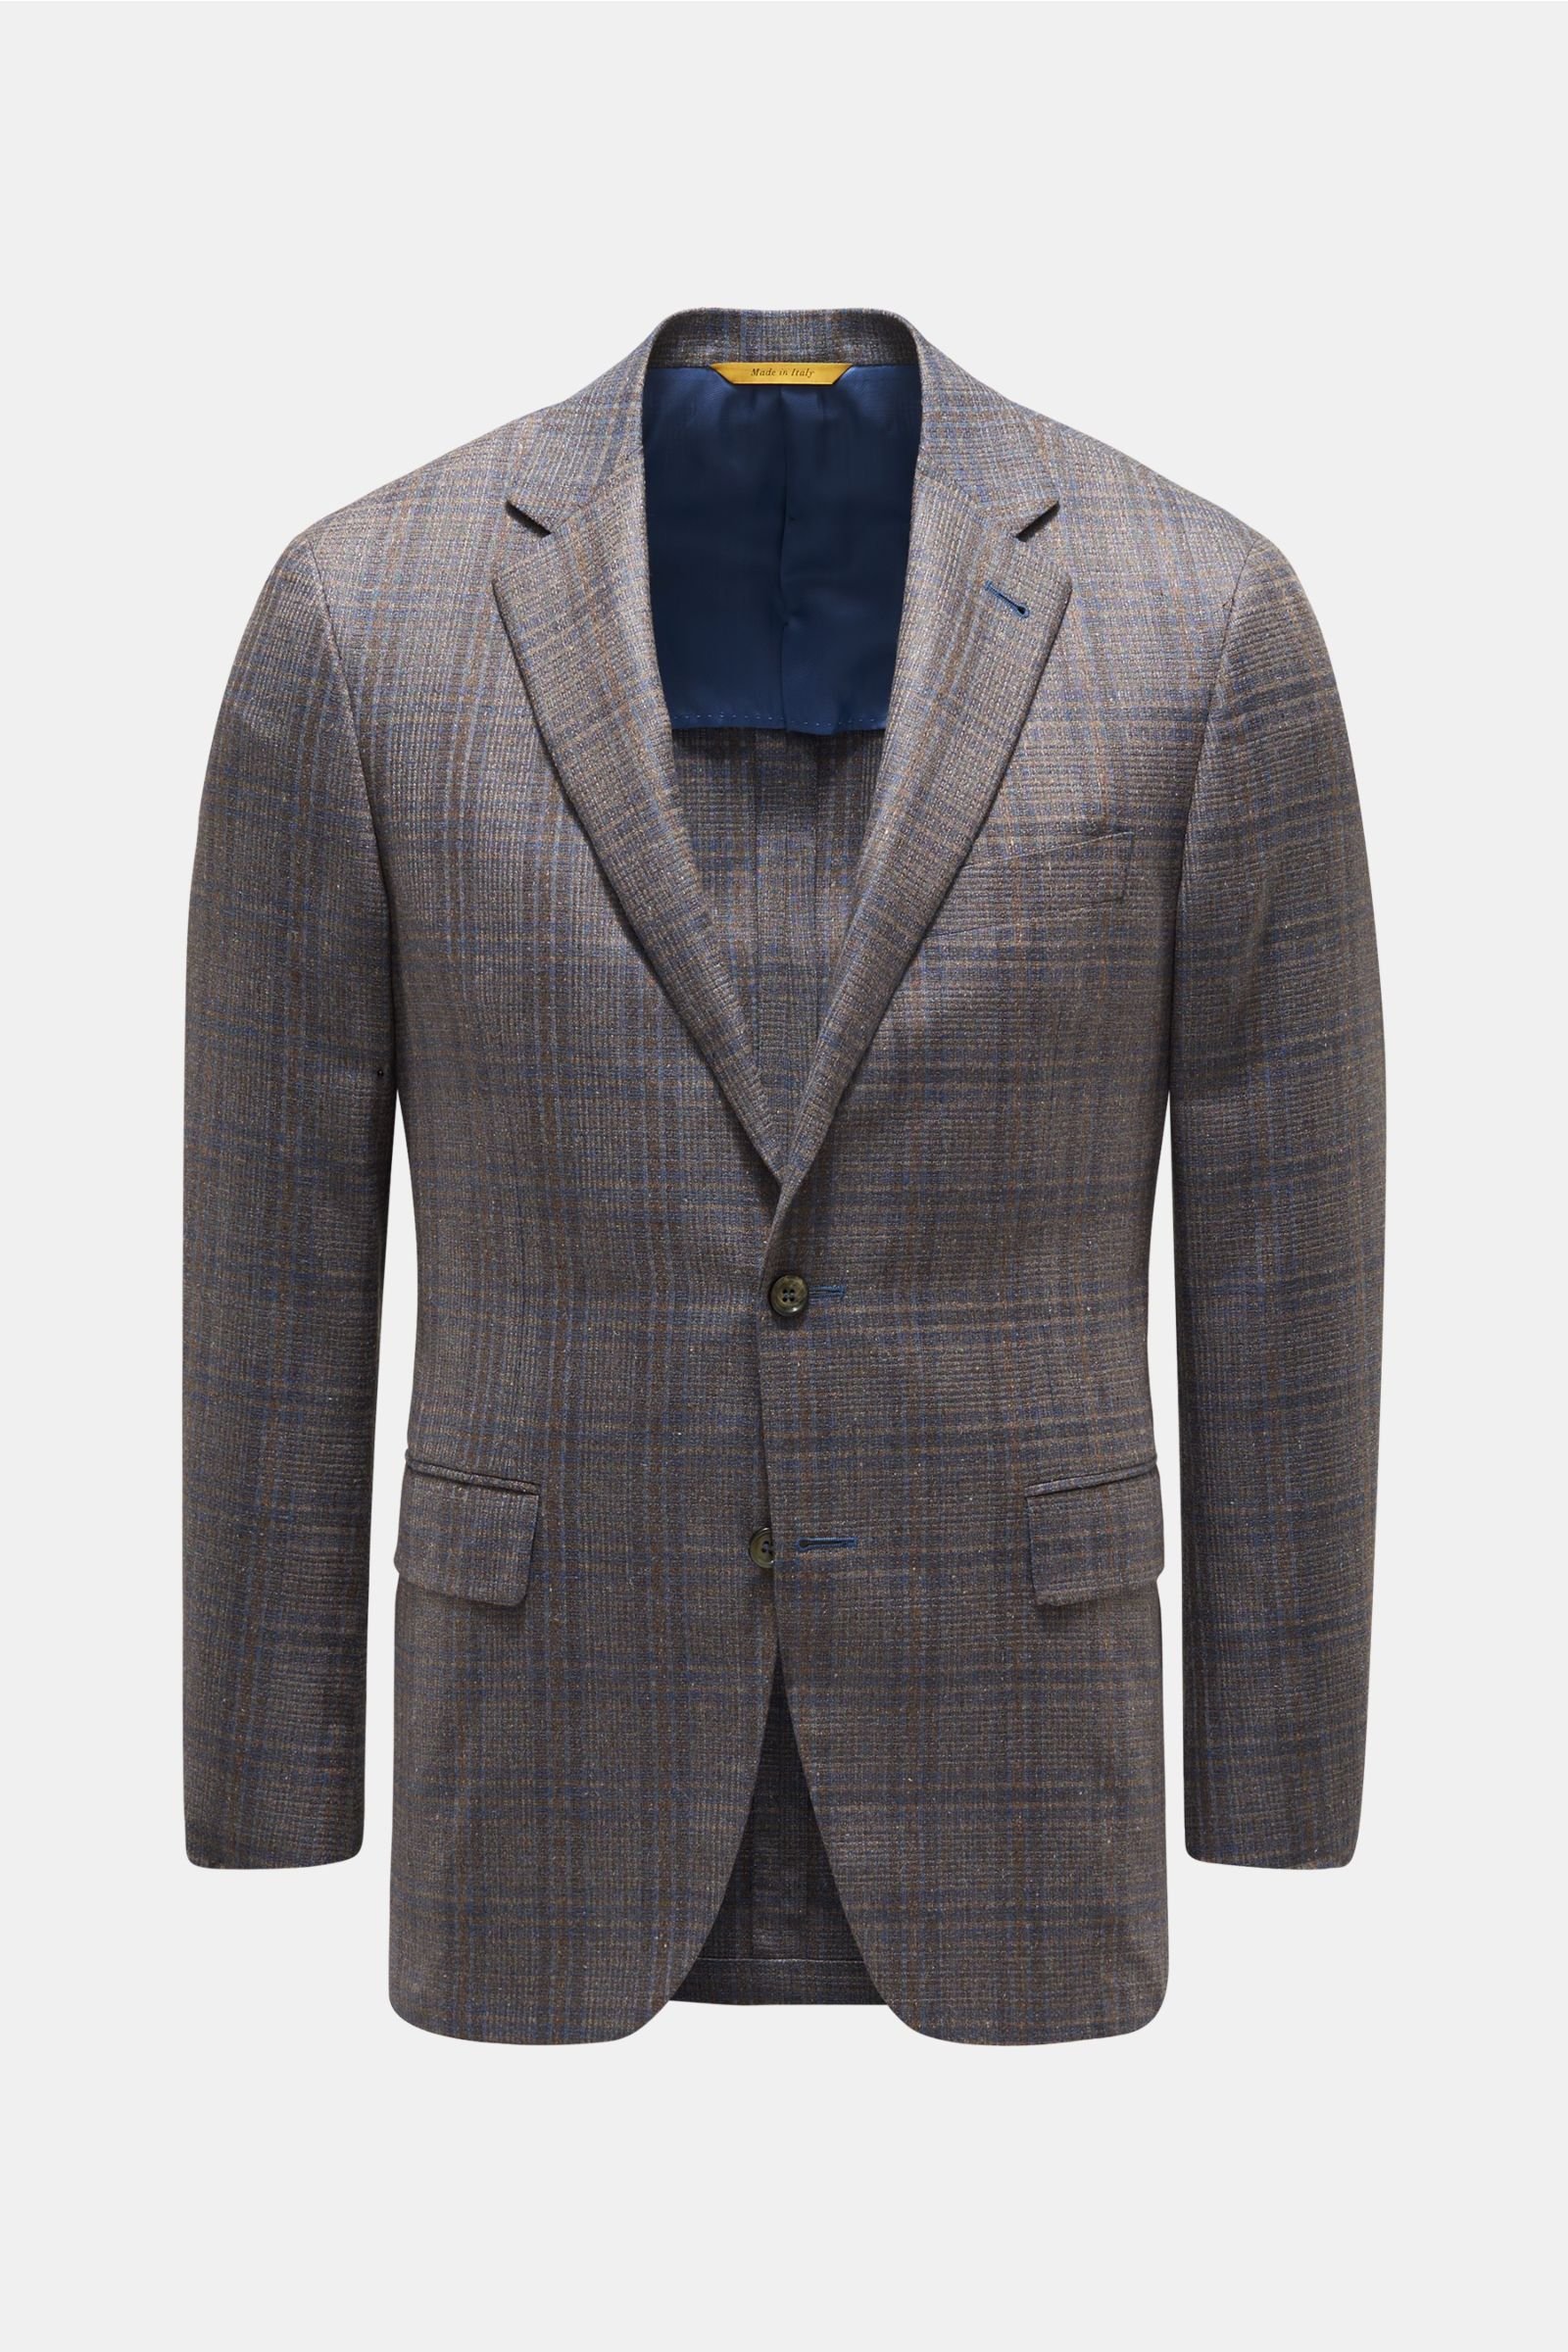 Smart-casual jacket 'Kei' smoky blue/brown checked